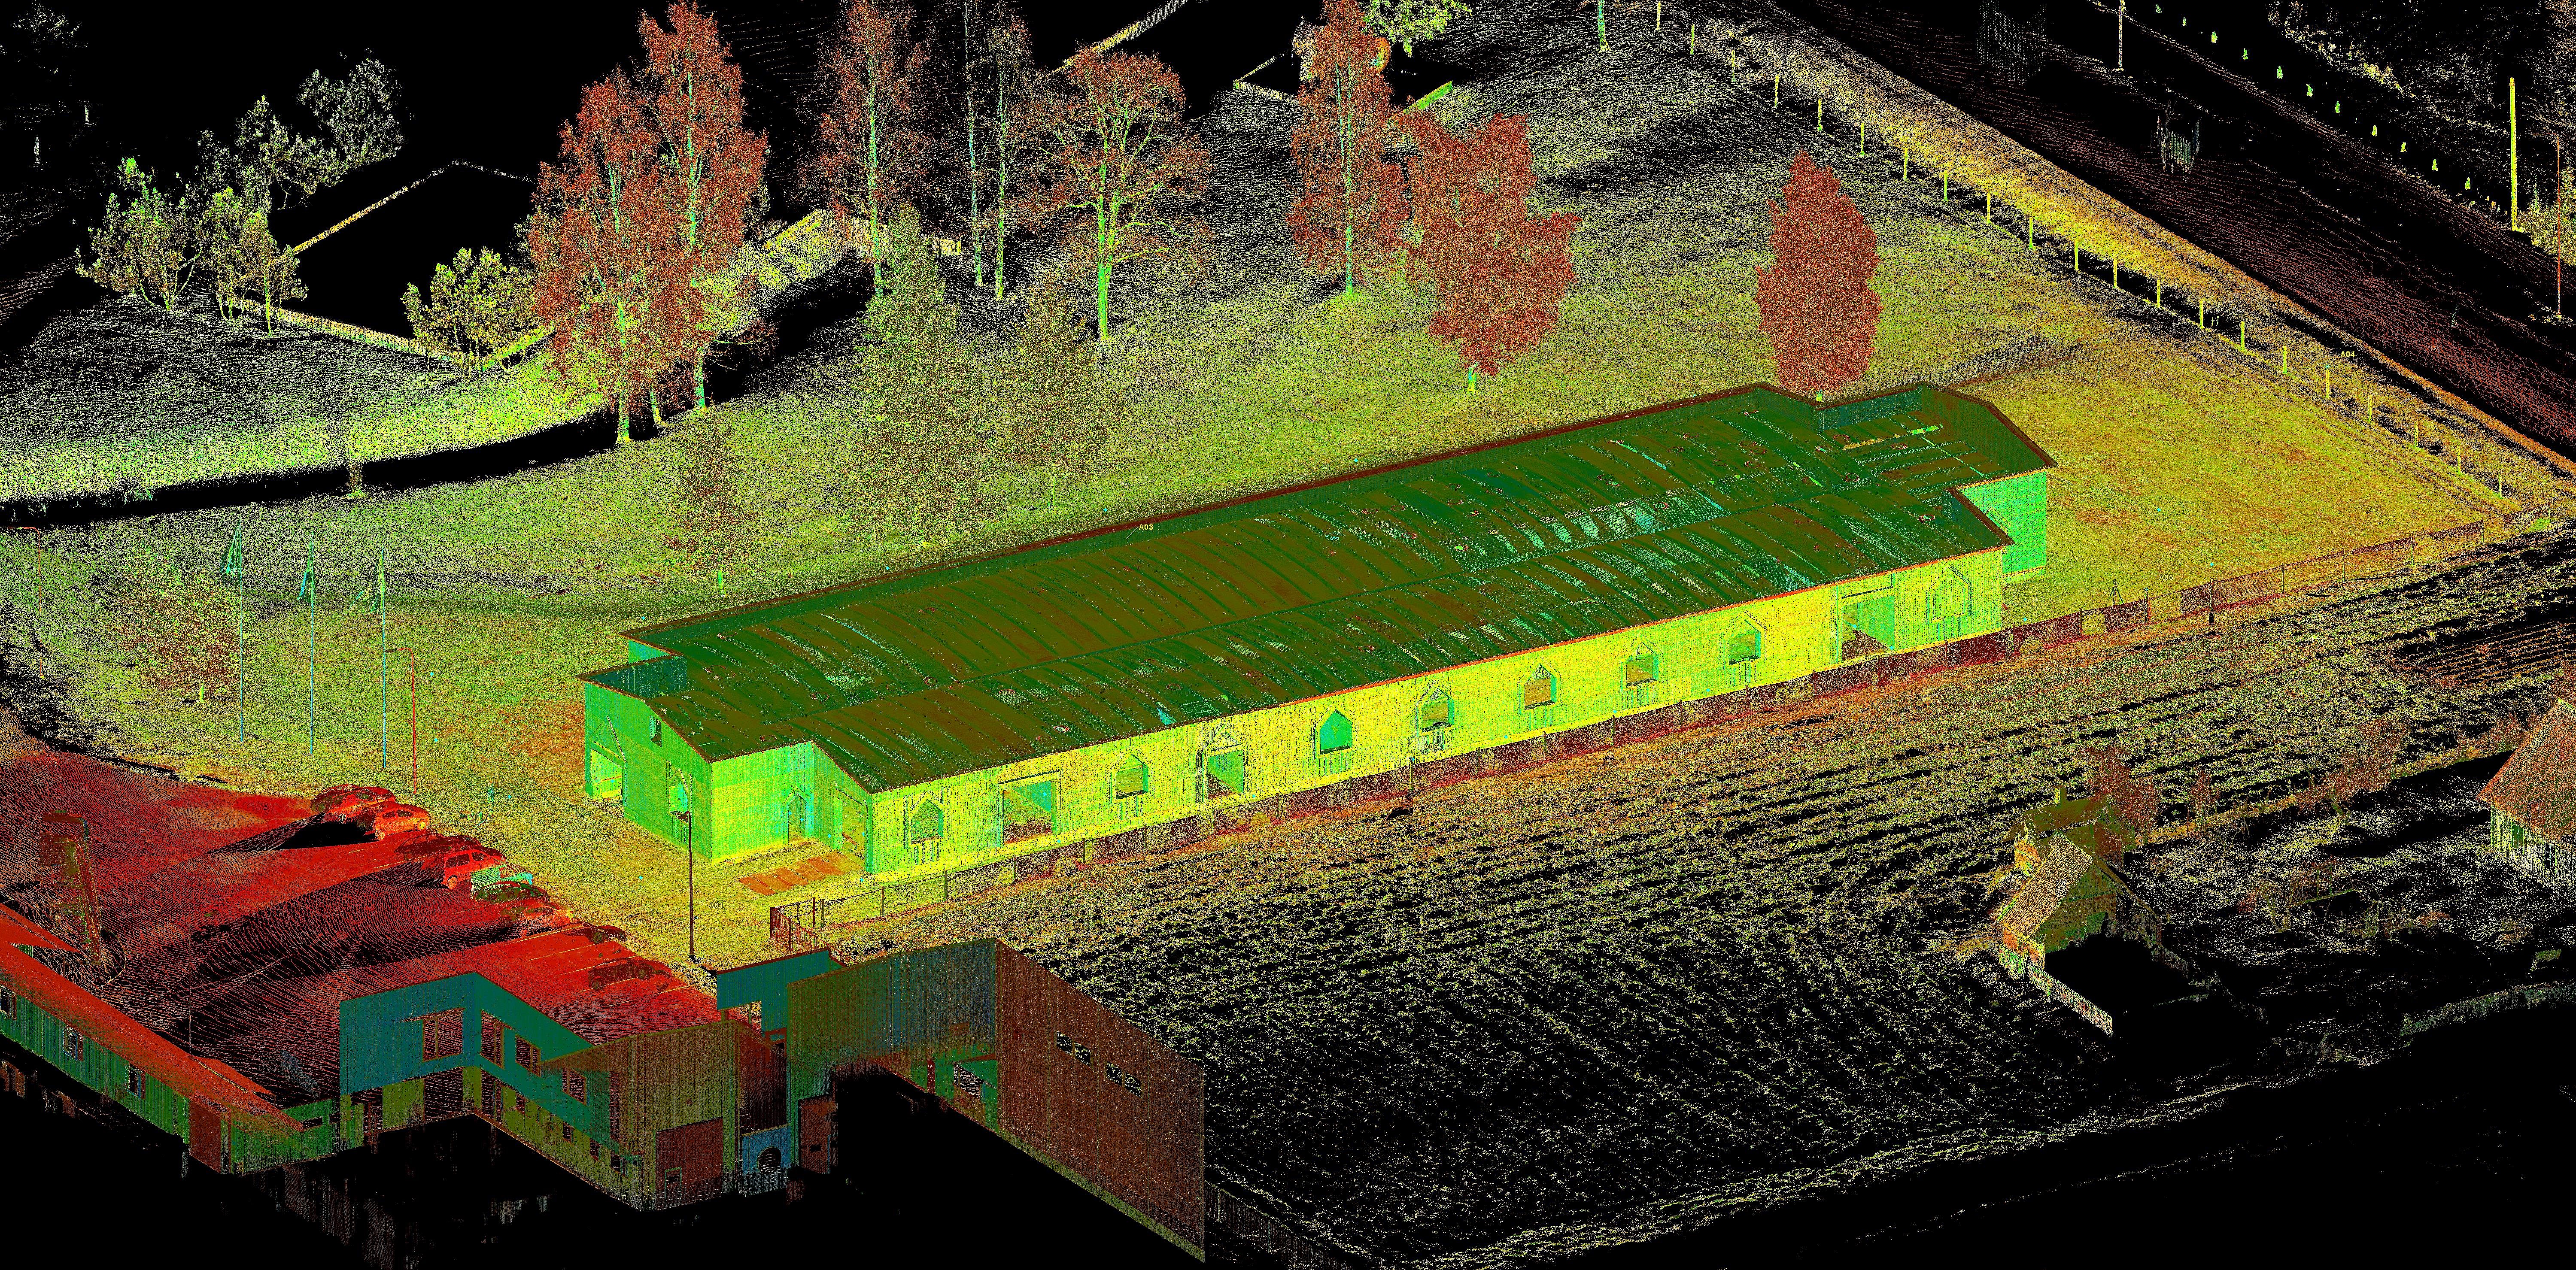 Laser scanning and 3D modeling of the old industrial building in Antsla, Estonia